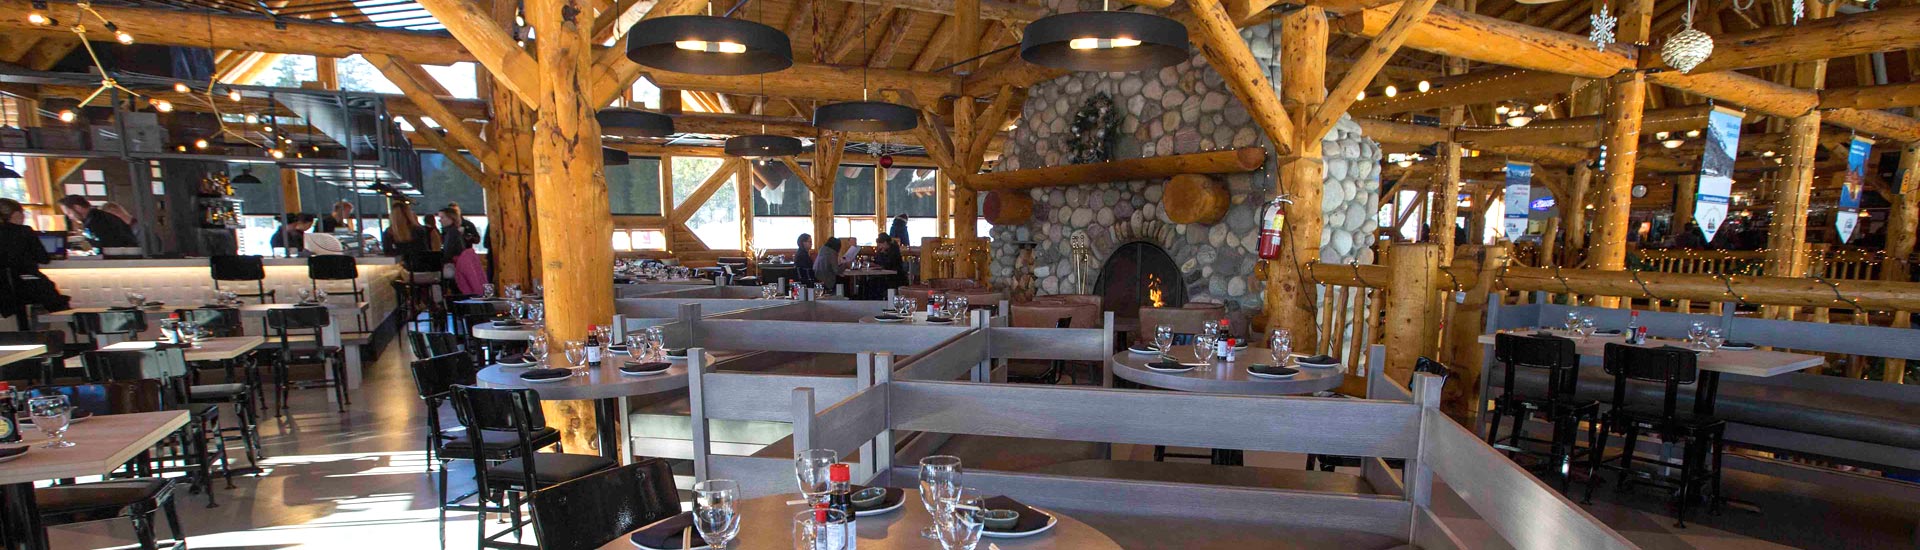 Lake Louise Dining Options